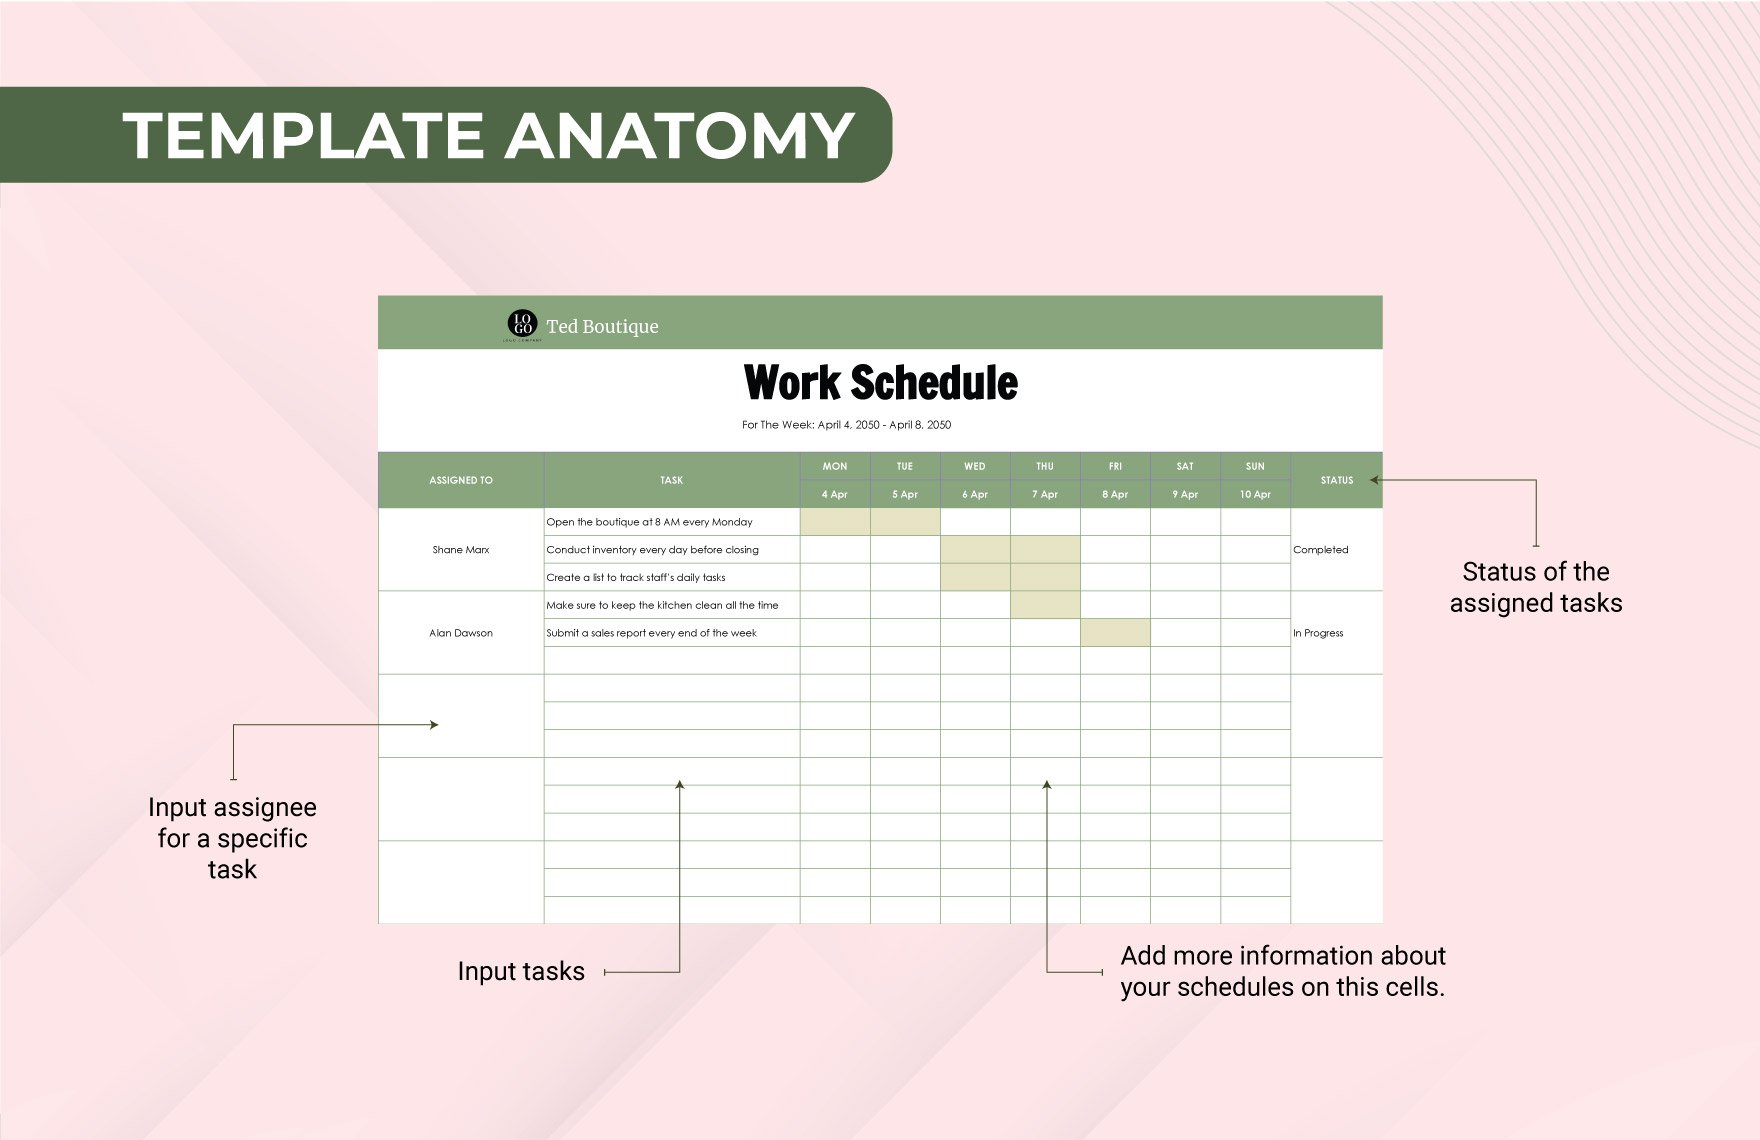 Printable Work Schedule Template